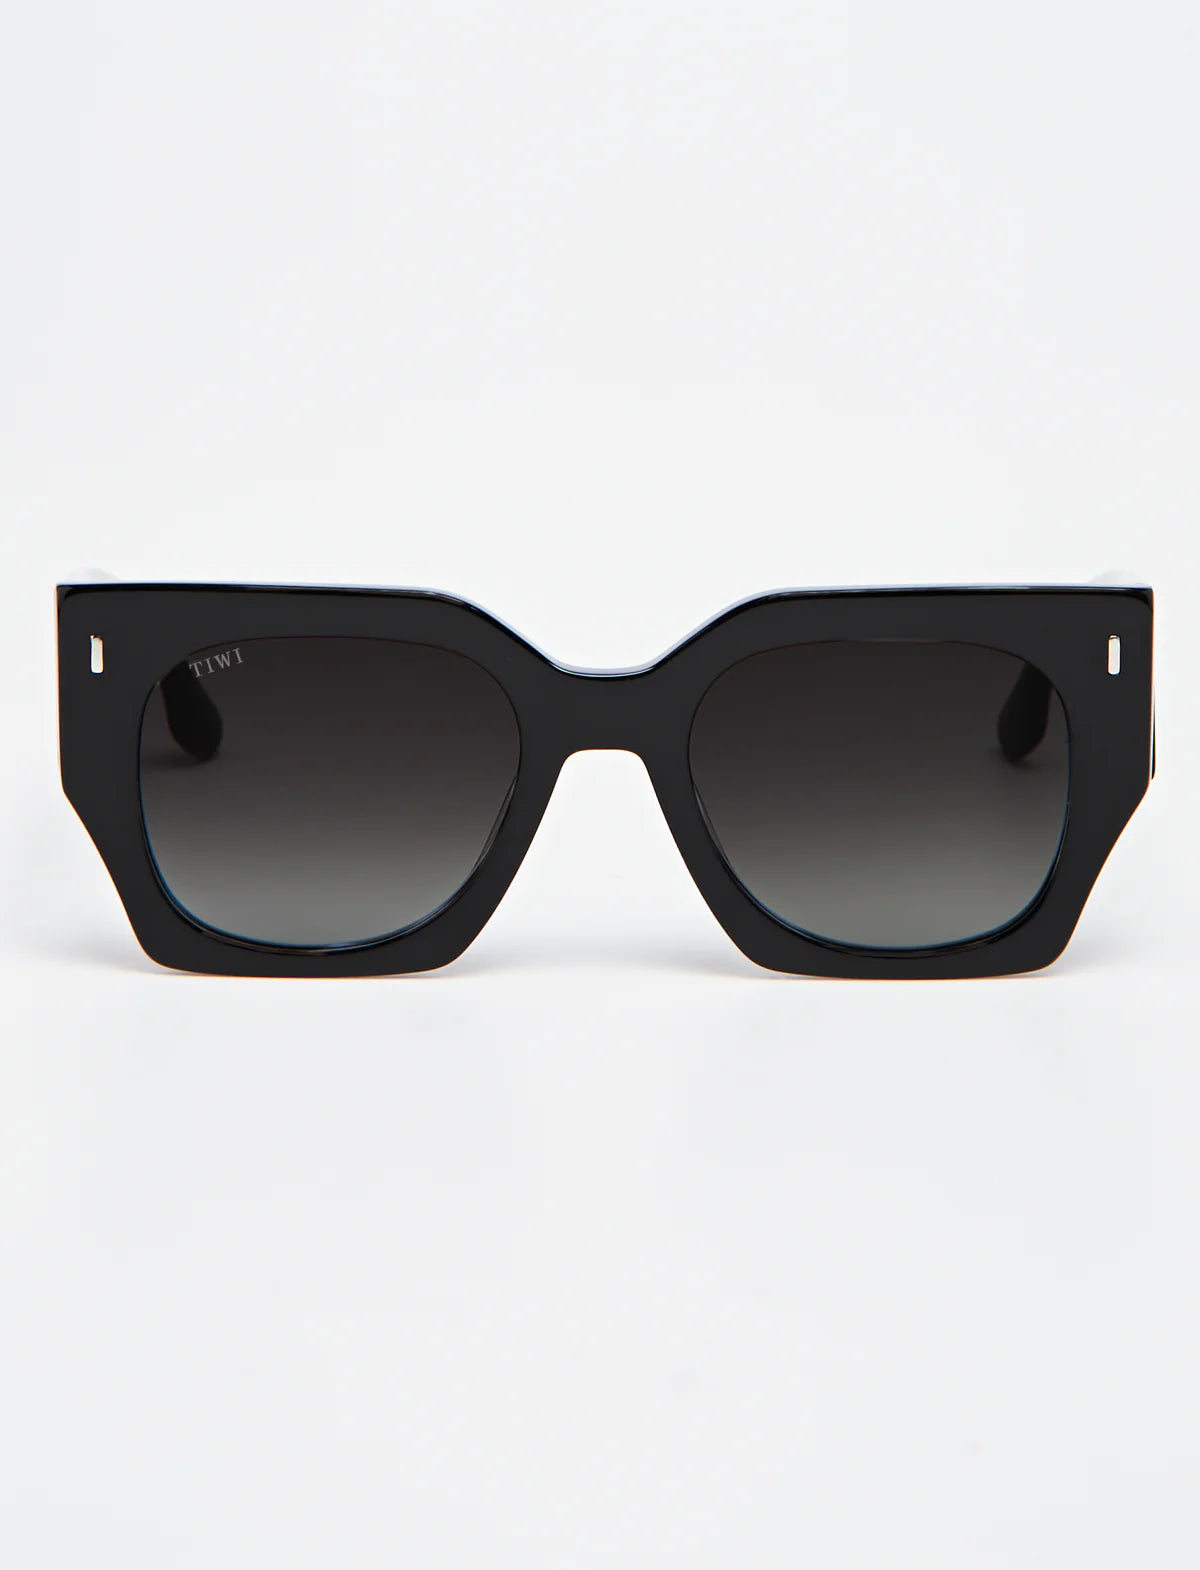 Limited Edition - Collection 1/300 Sunglasses TIWI USA Matt Black Limited Edition 1/300  